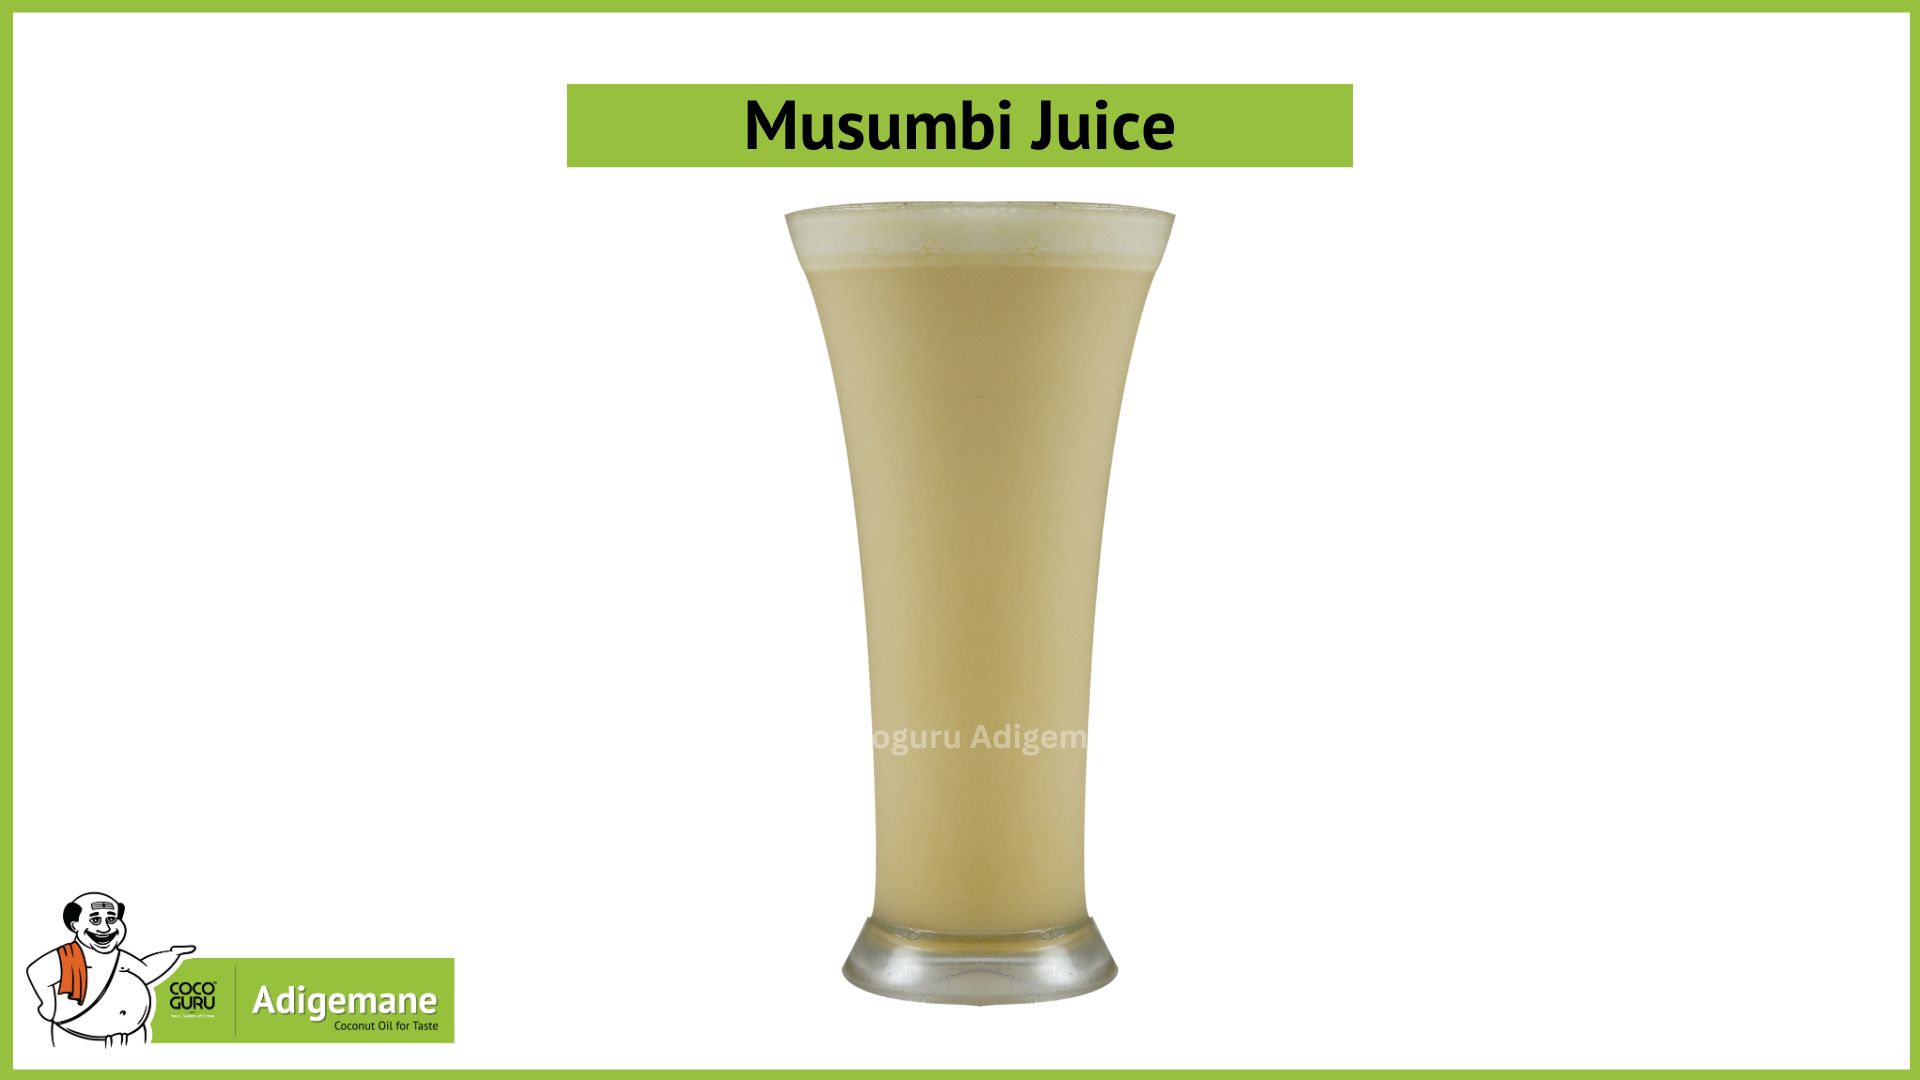 Musumbi Juice